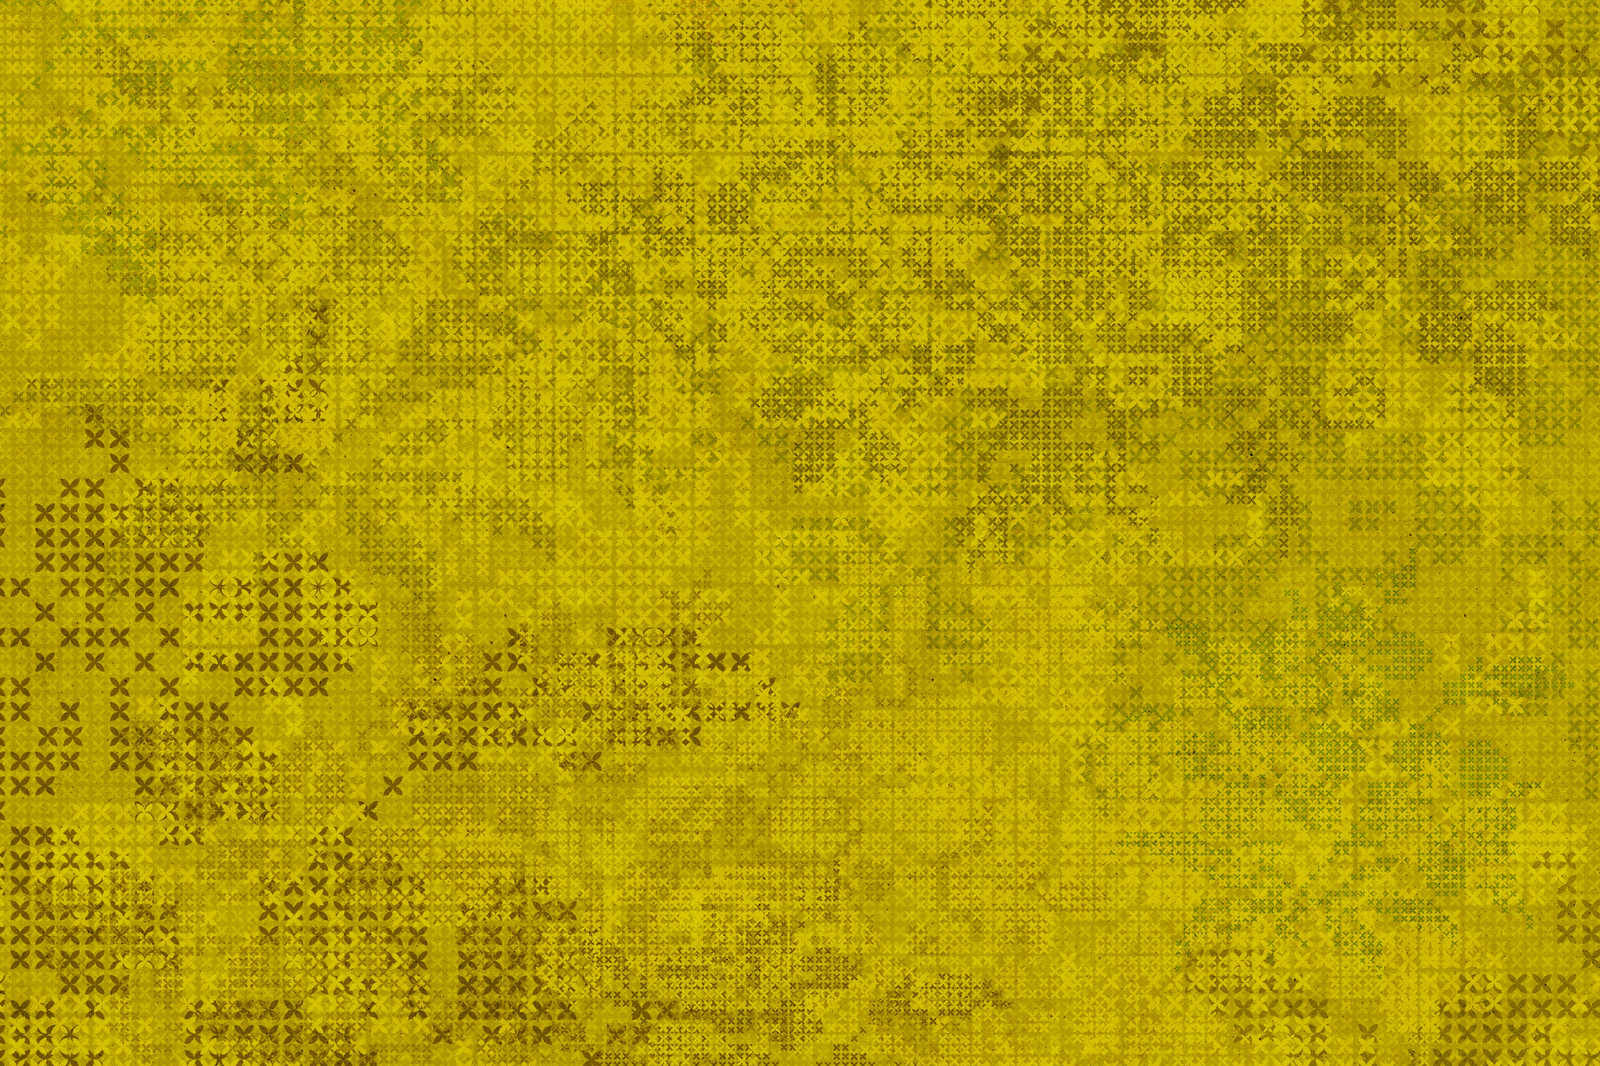             Pixel Canvas schilderij Kruissteek patroon - 0,90 m x 0,60 m
        